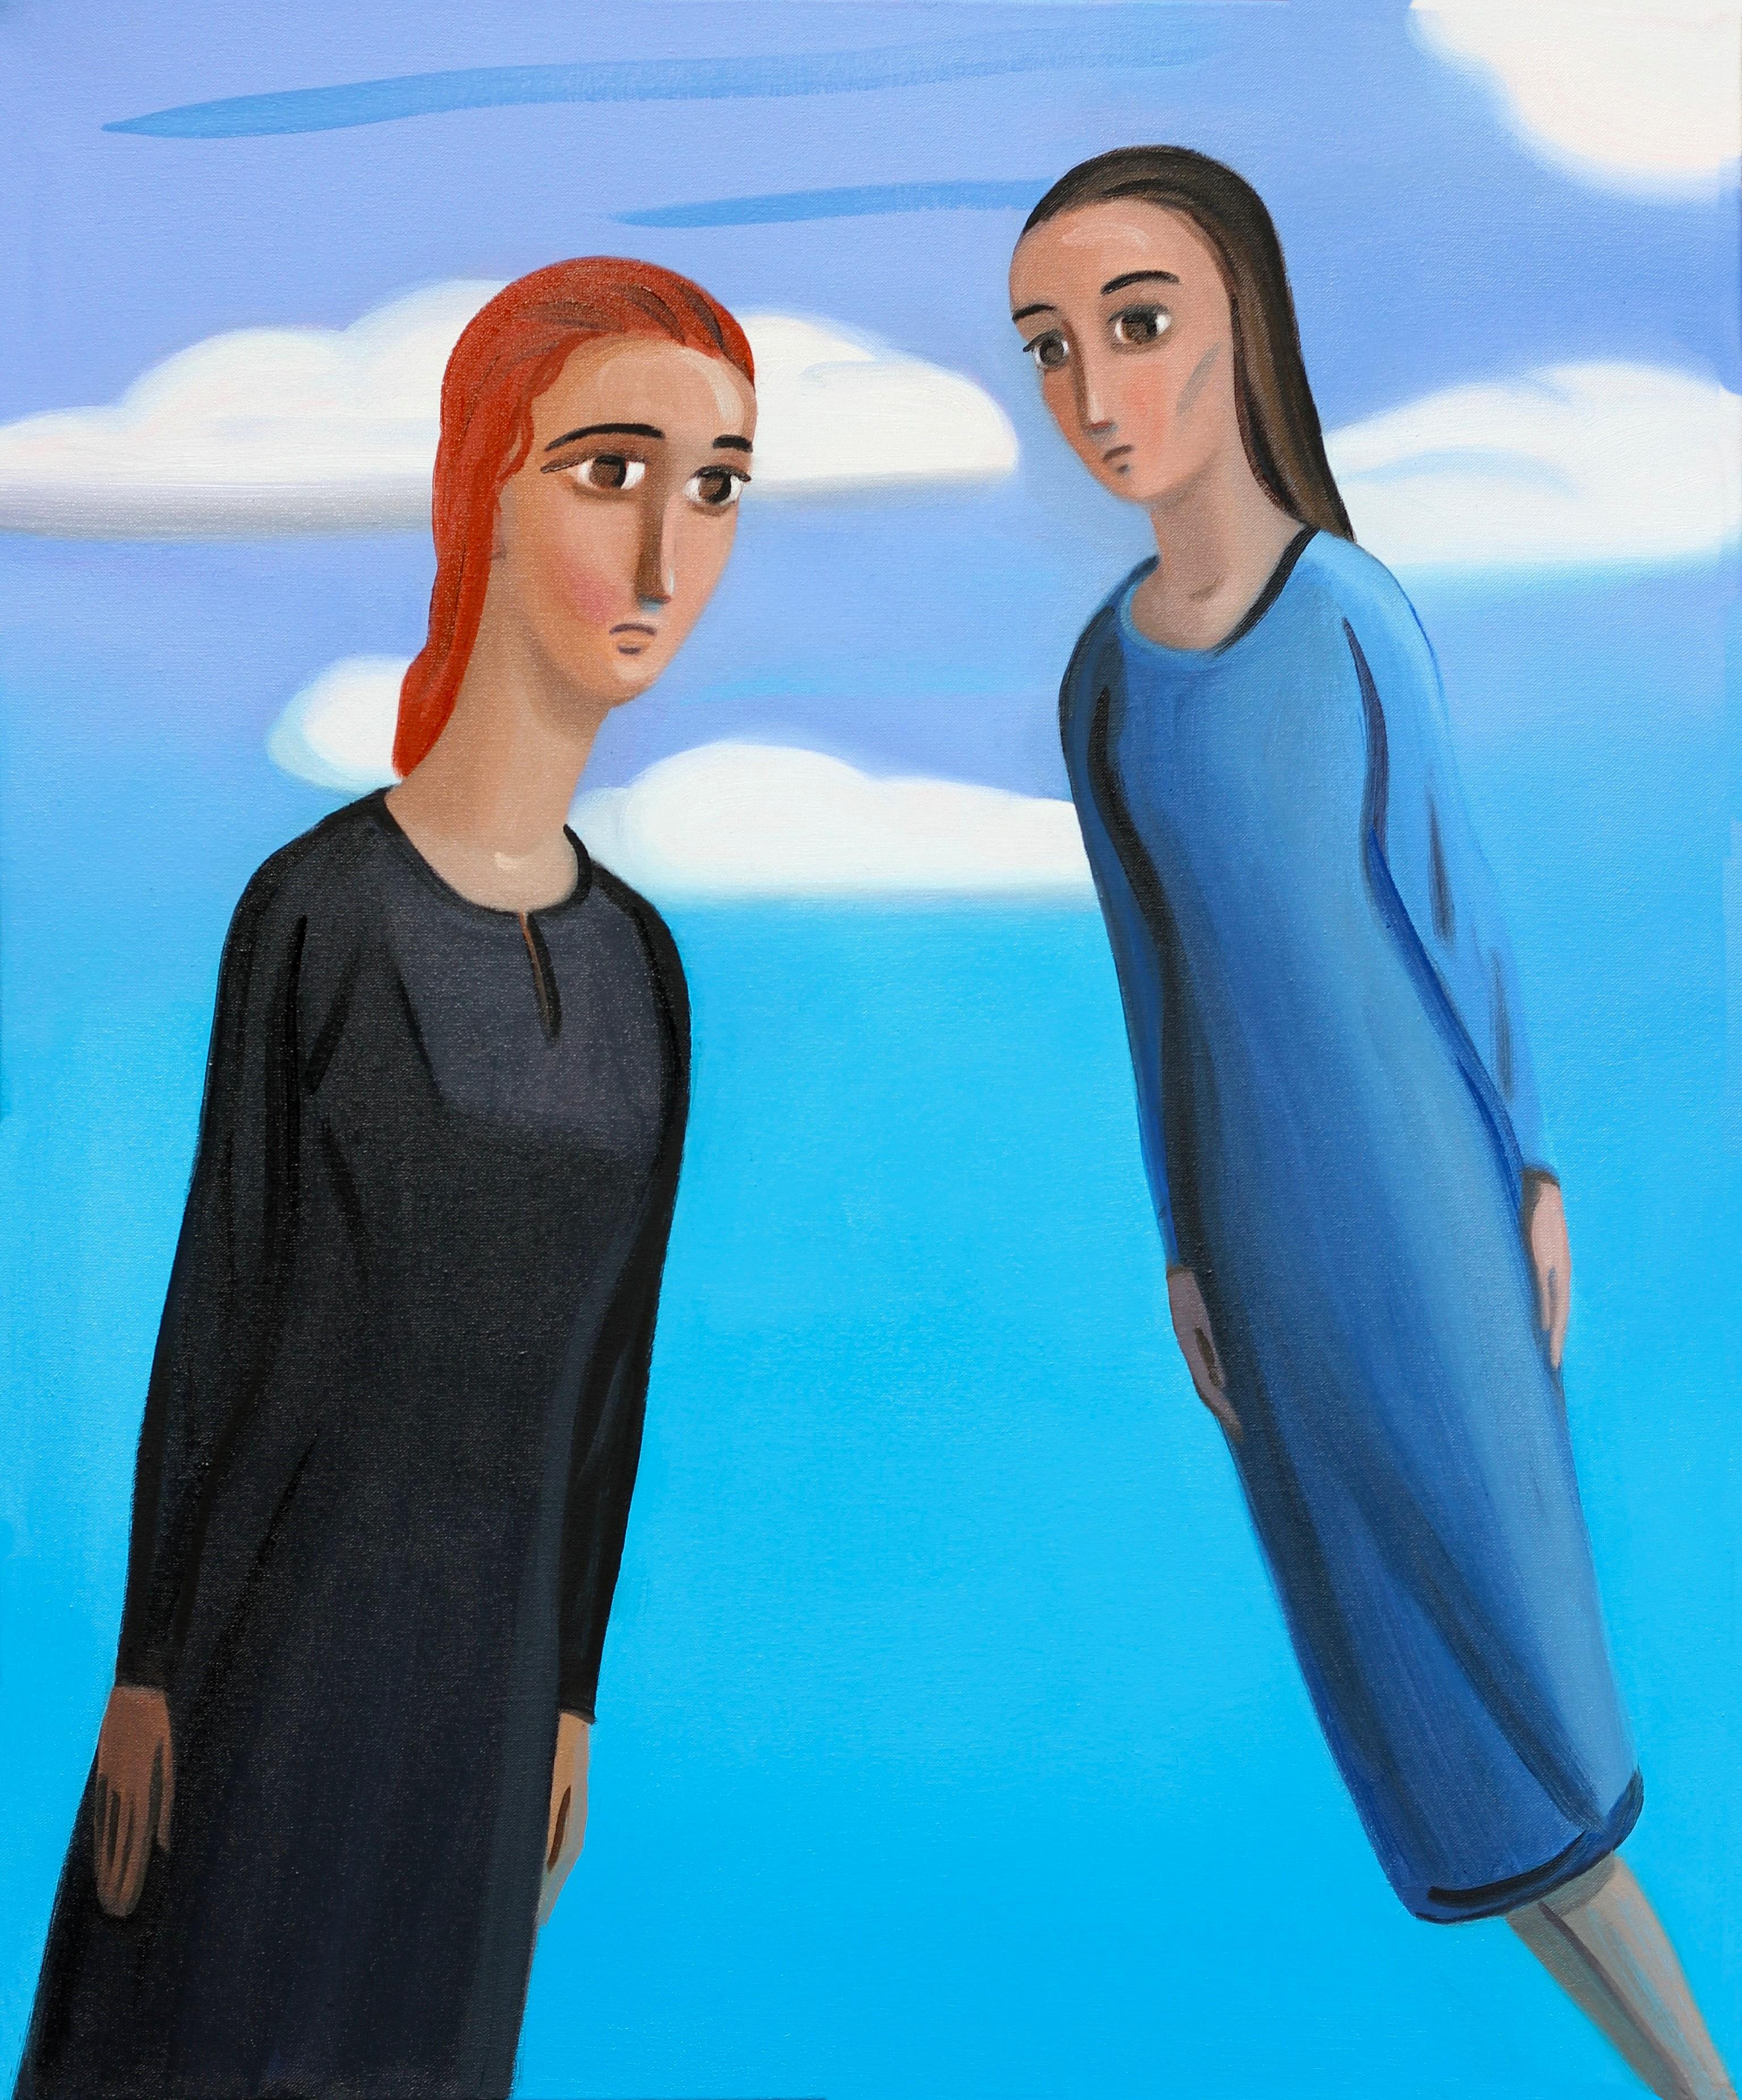 Figurative Painting Sonia Martin - FLYING HIGH Huile sur toile, contemporain, figuratif, nuages, personnages, bleu